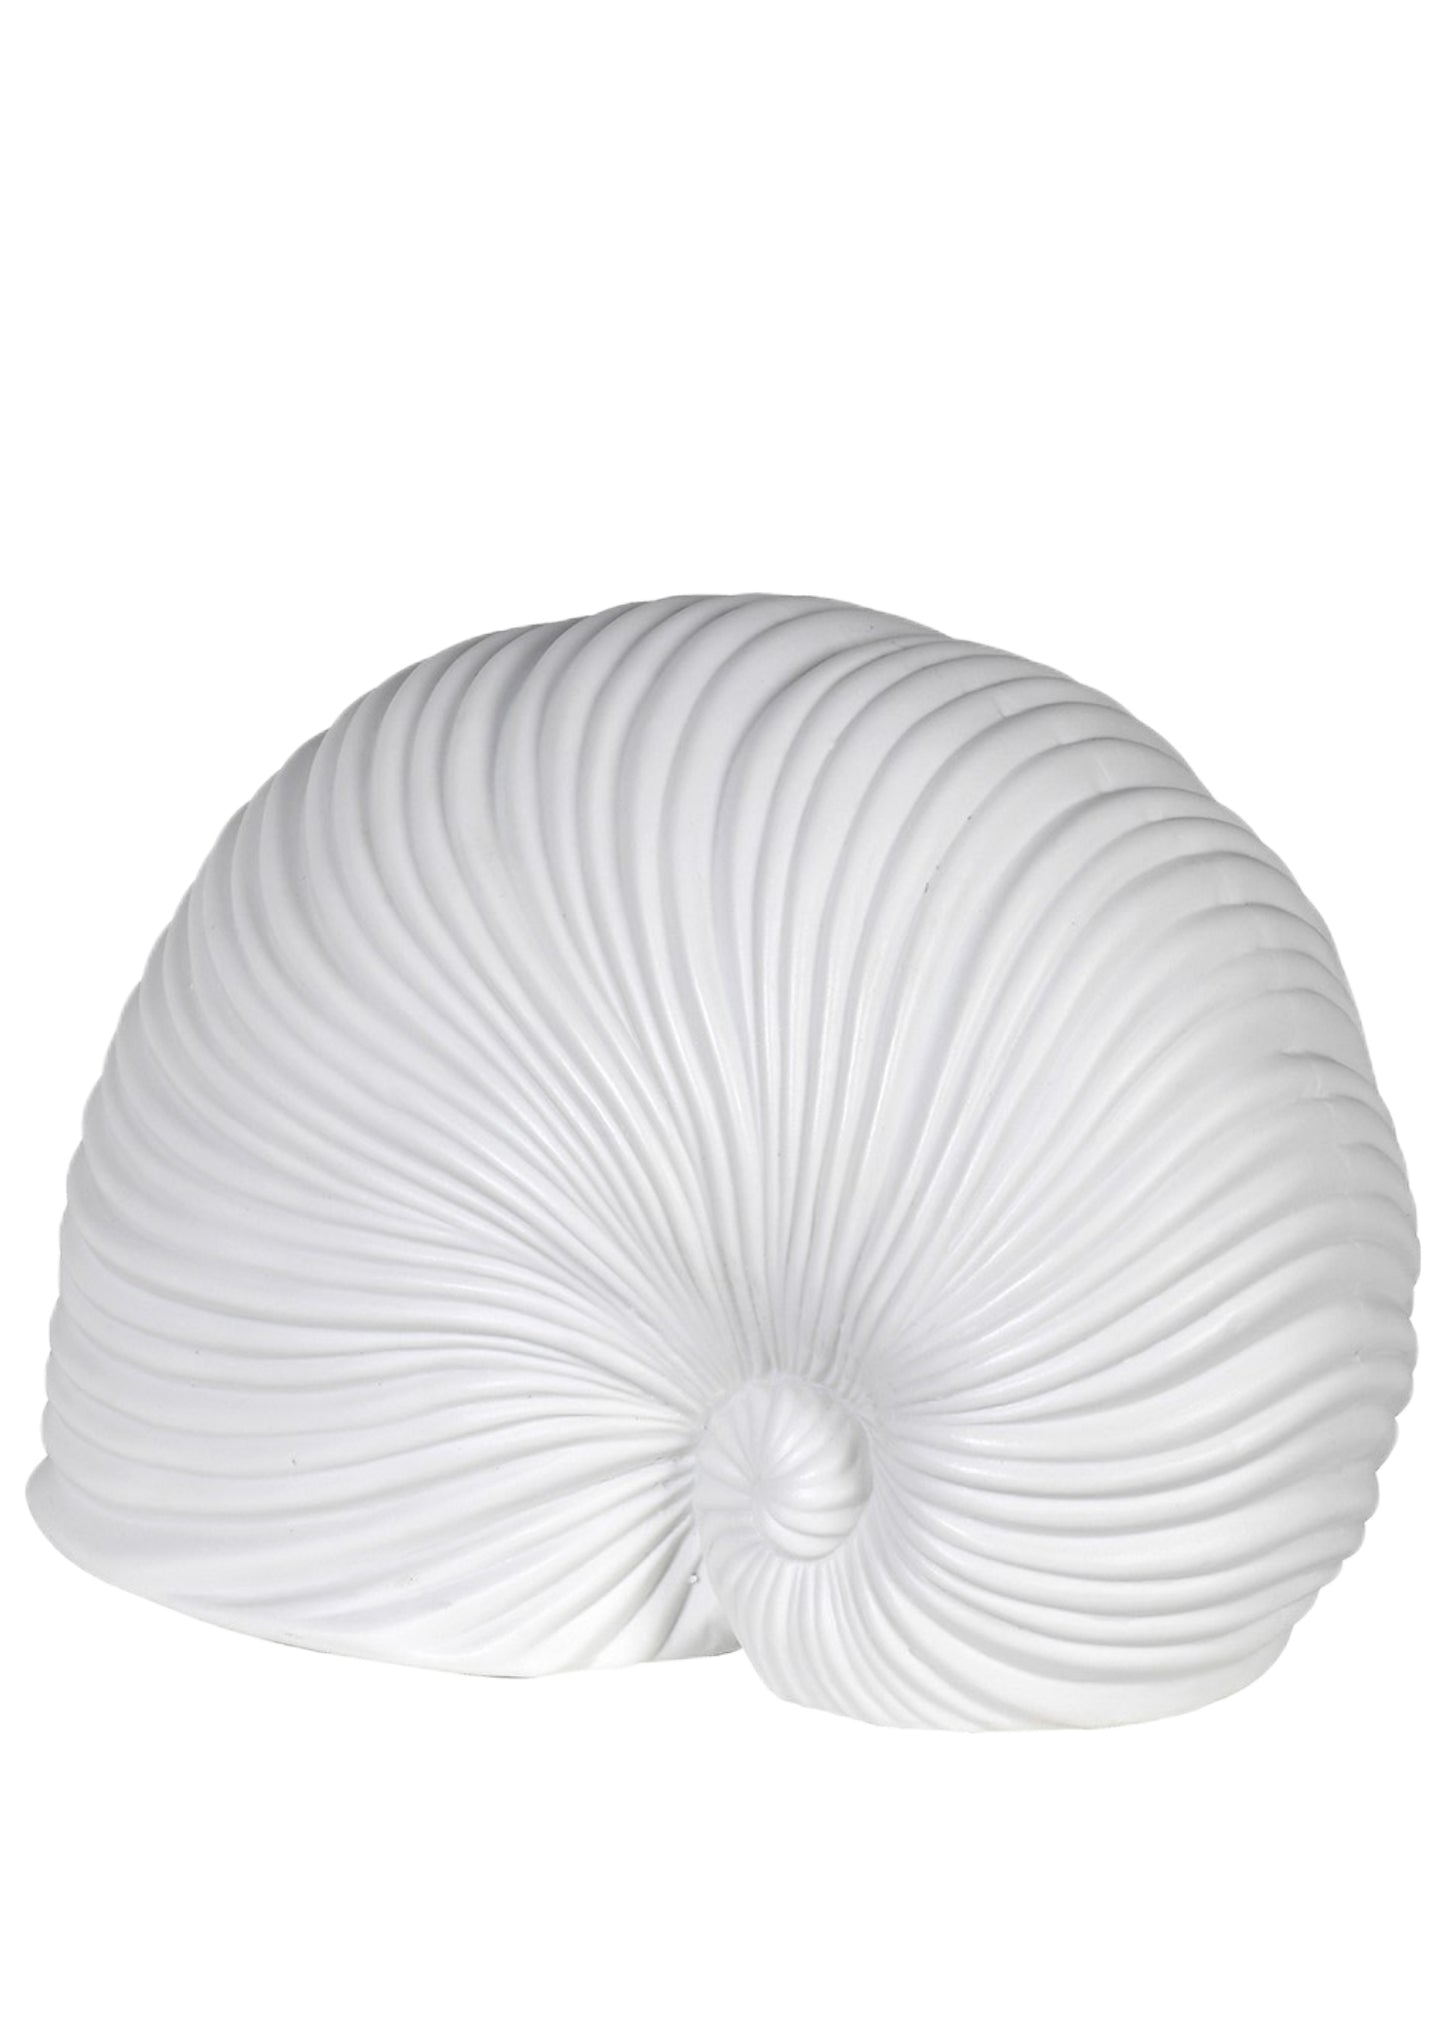 White Porcelain Sea Snail Ornament